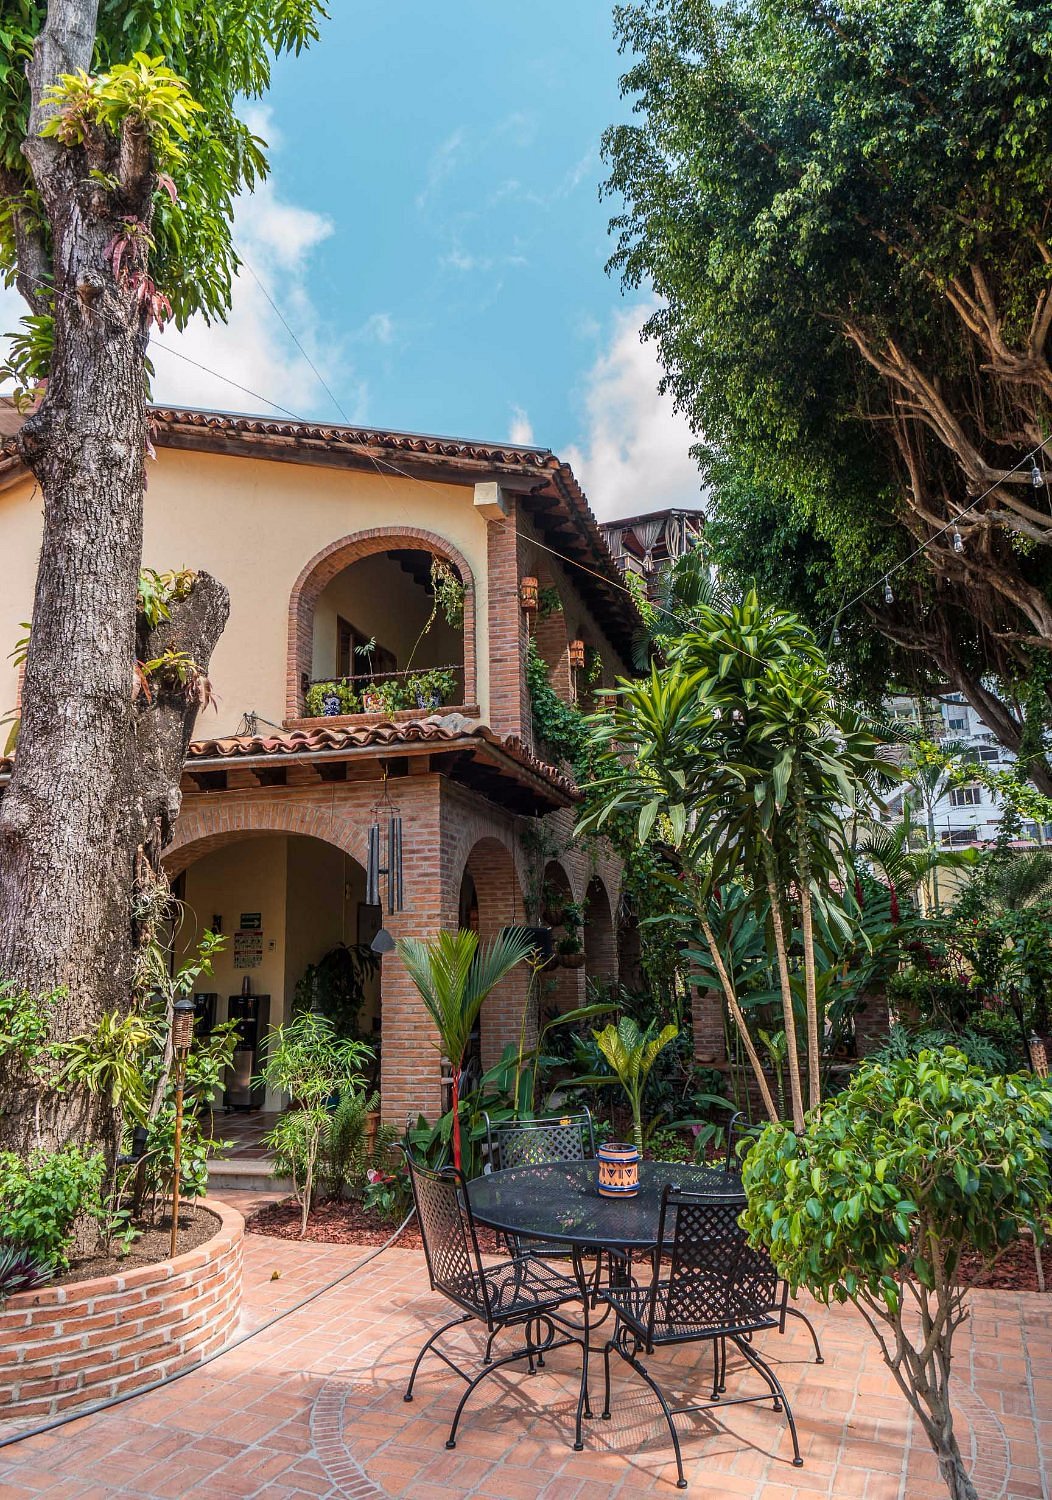 The Property – Hacienda Escondida PV